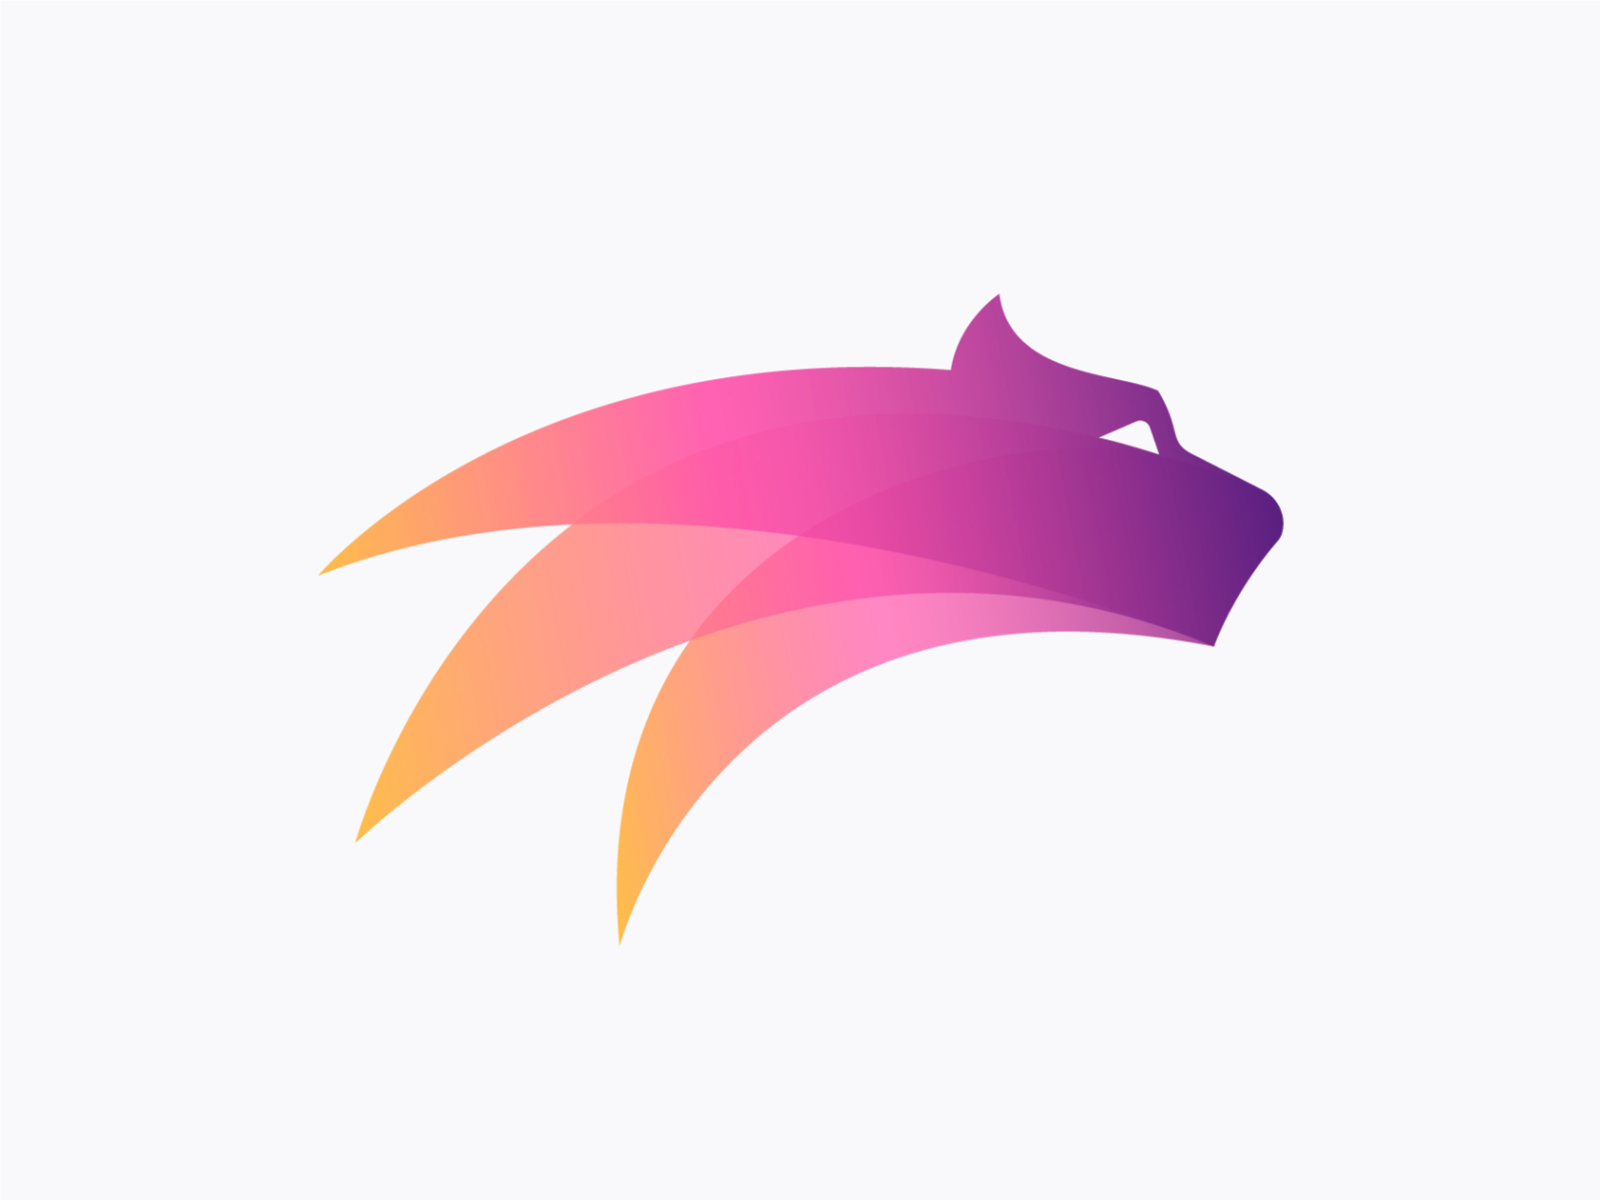 pink puma logo